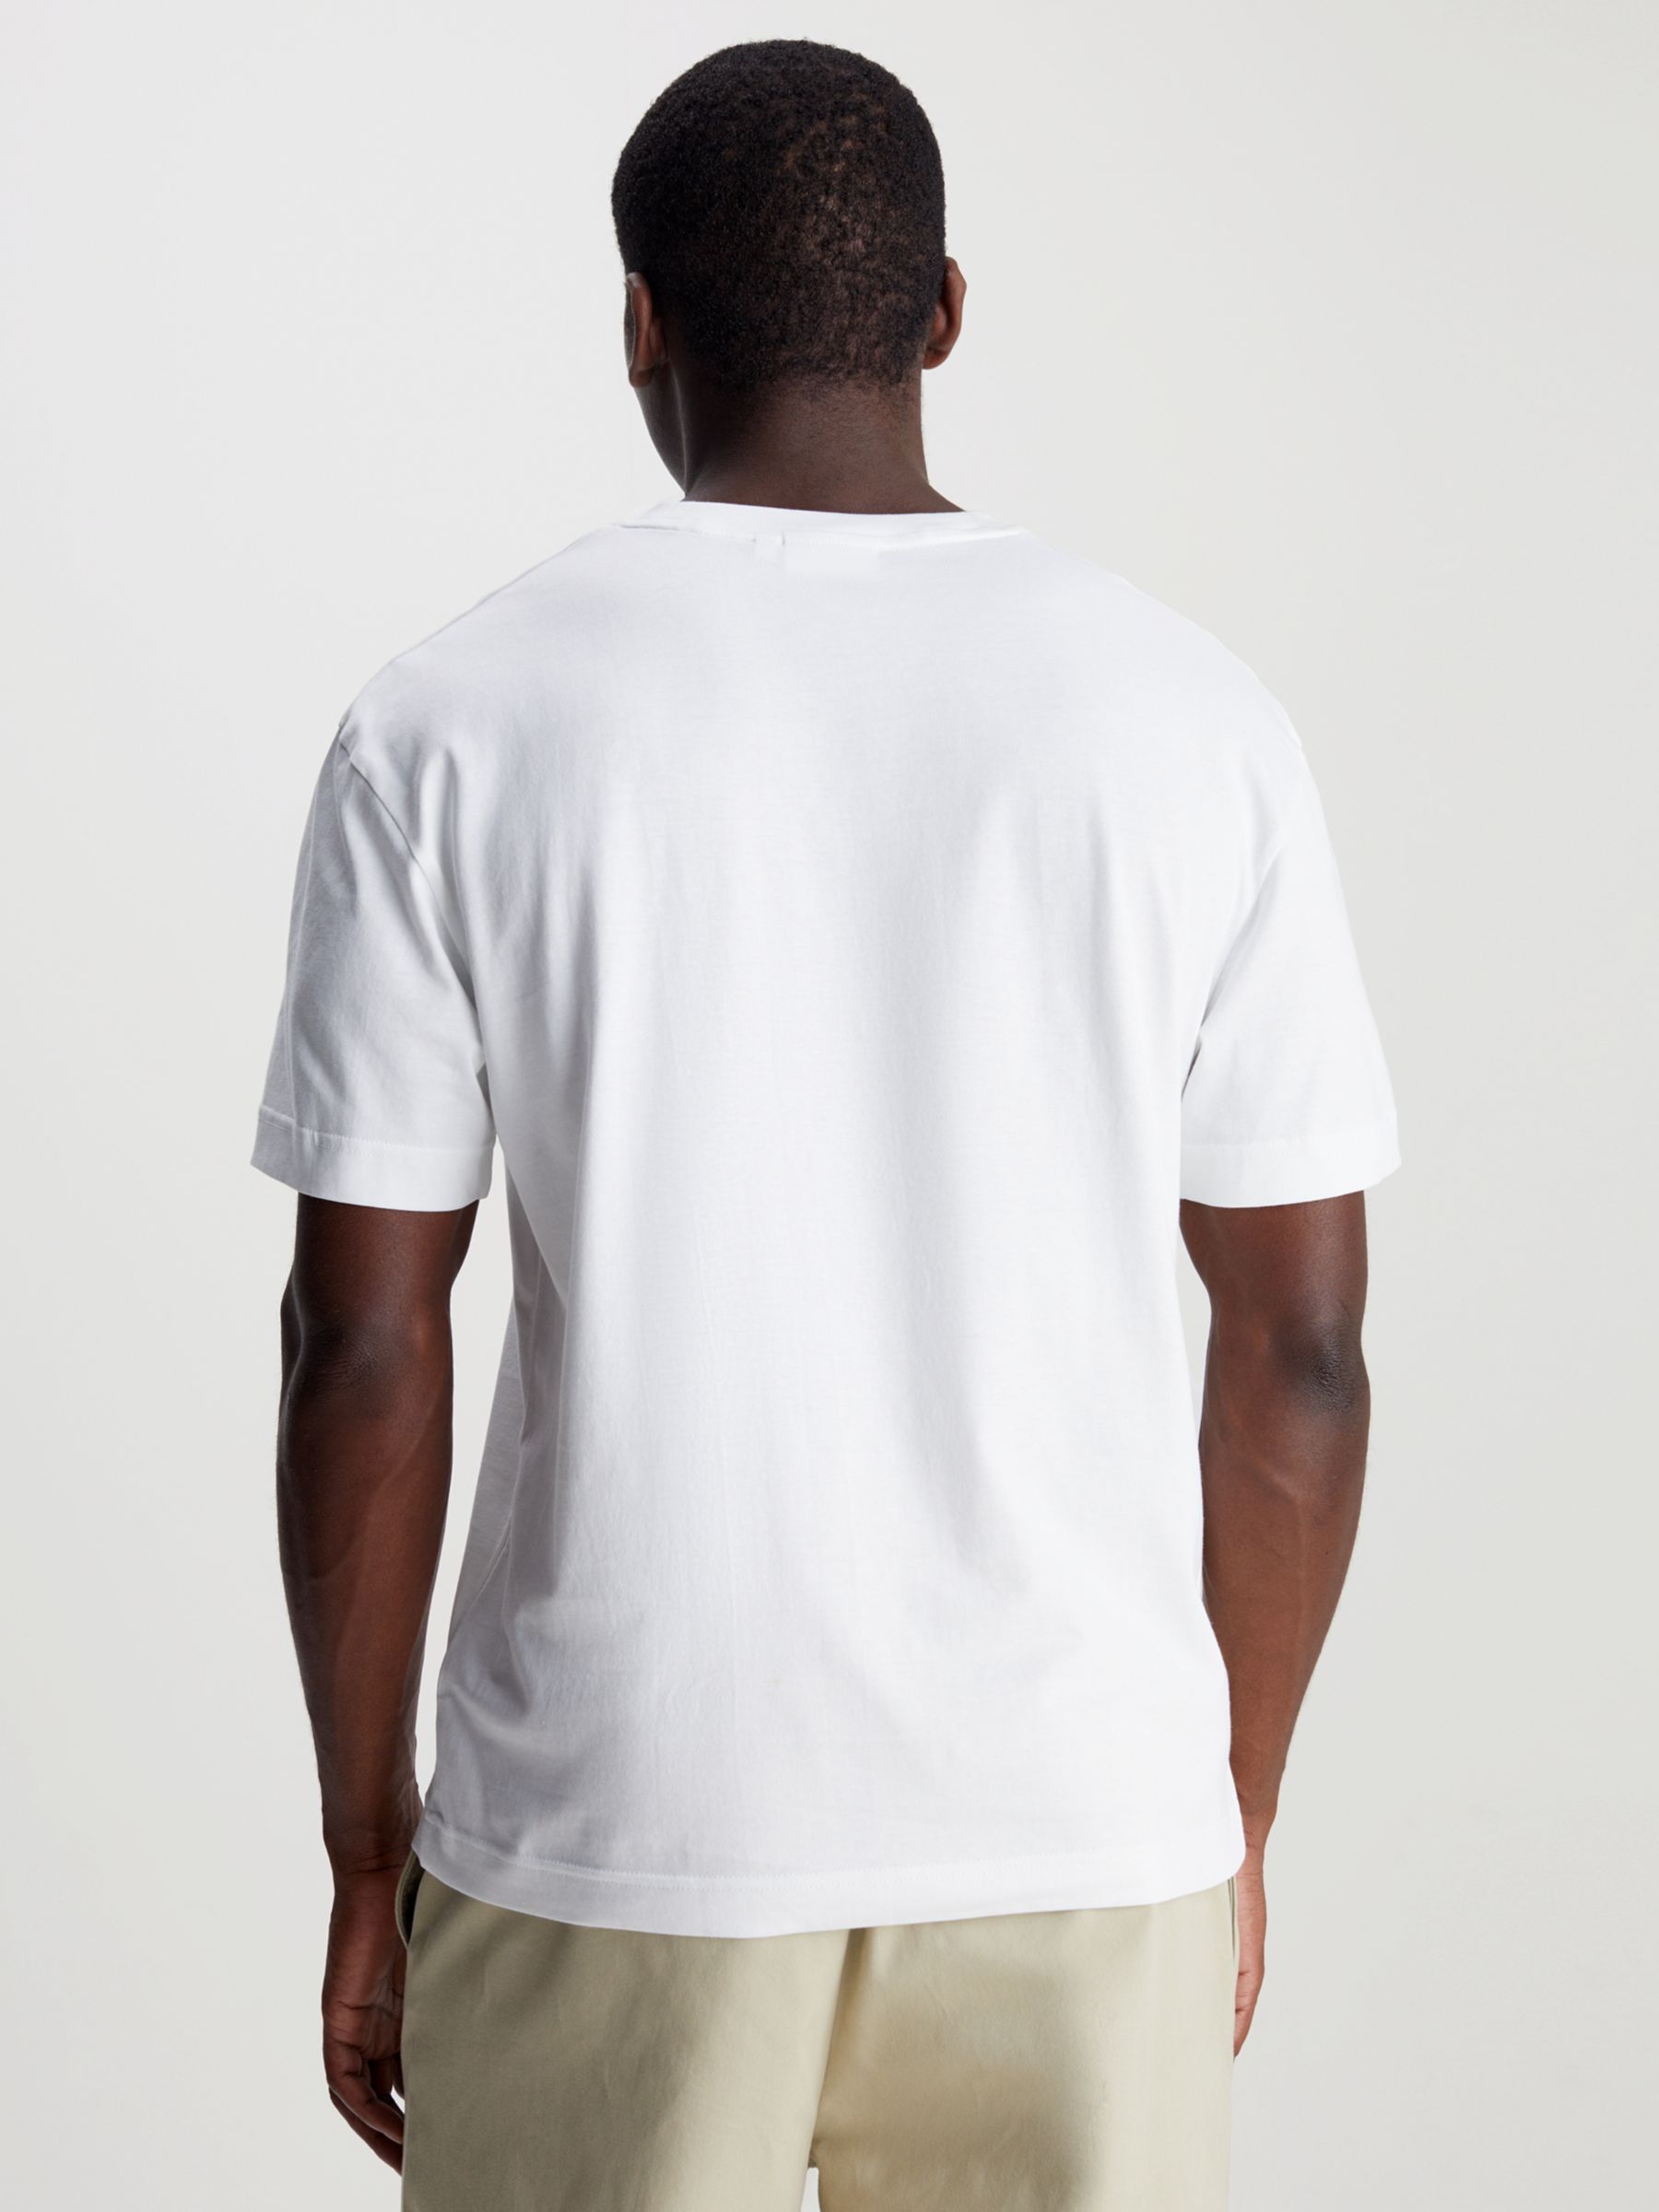 Calvin Klein Woven Logo T-Shirt, White, L